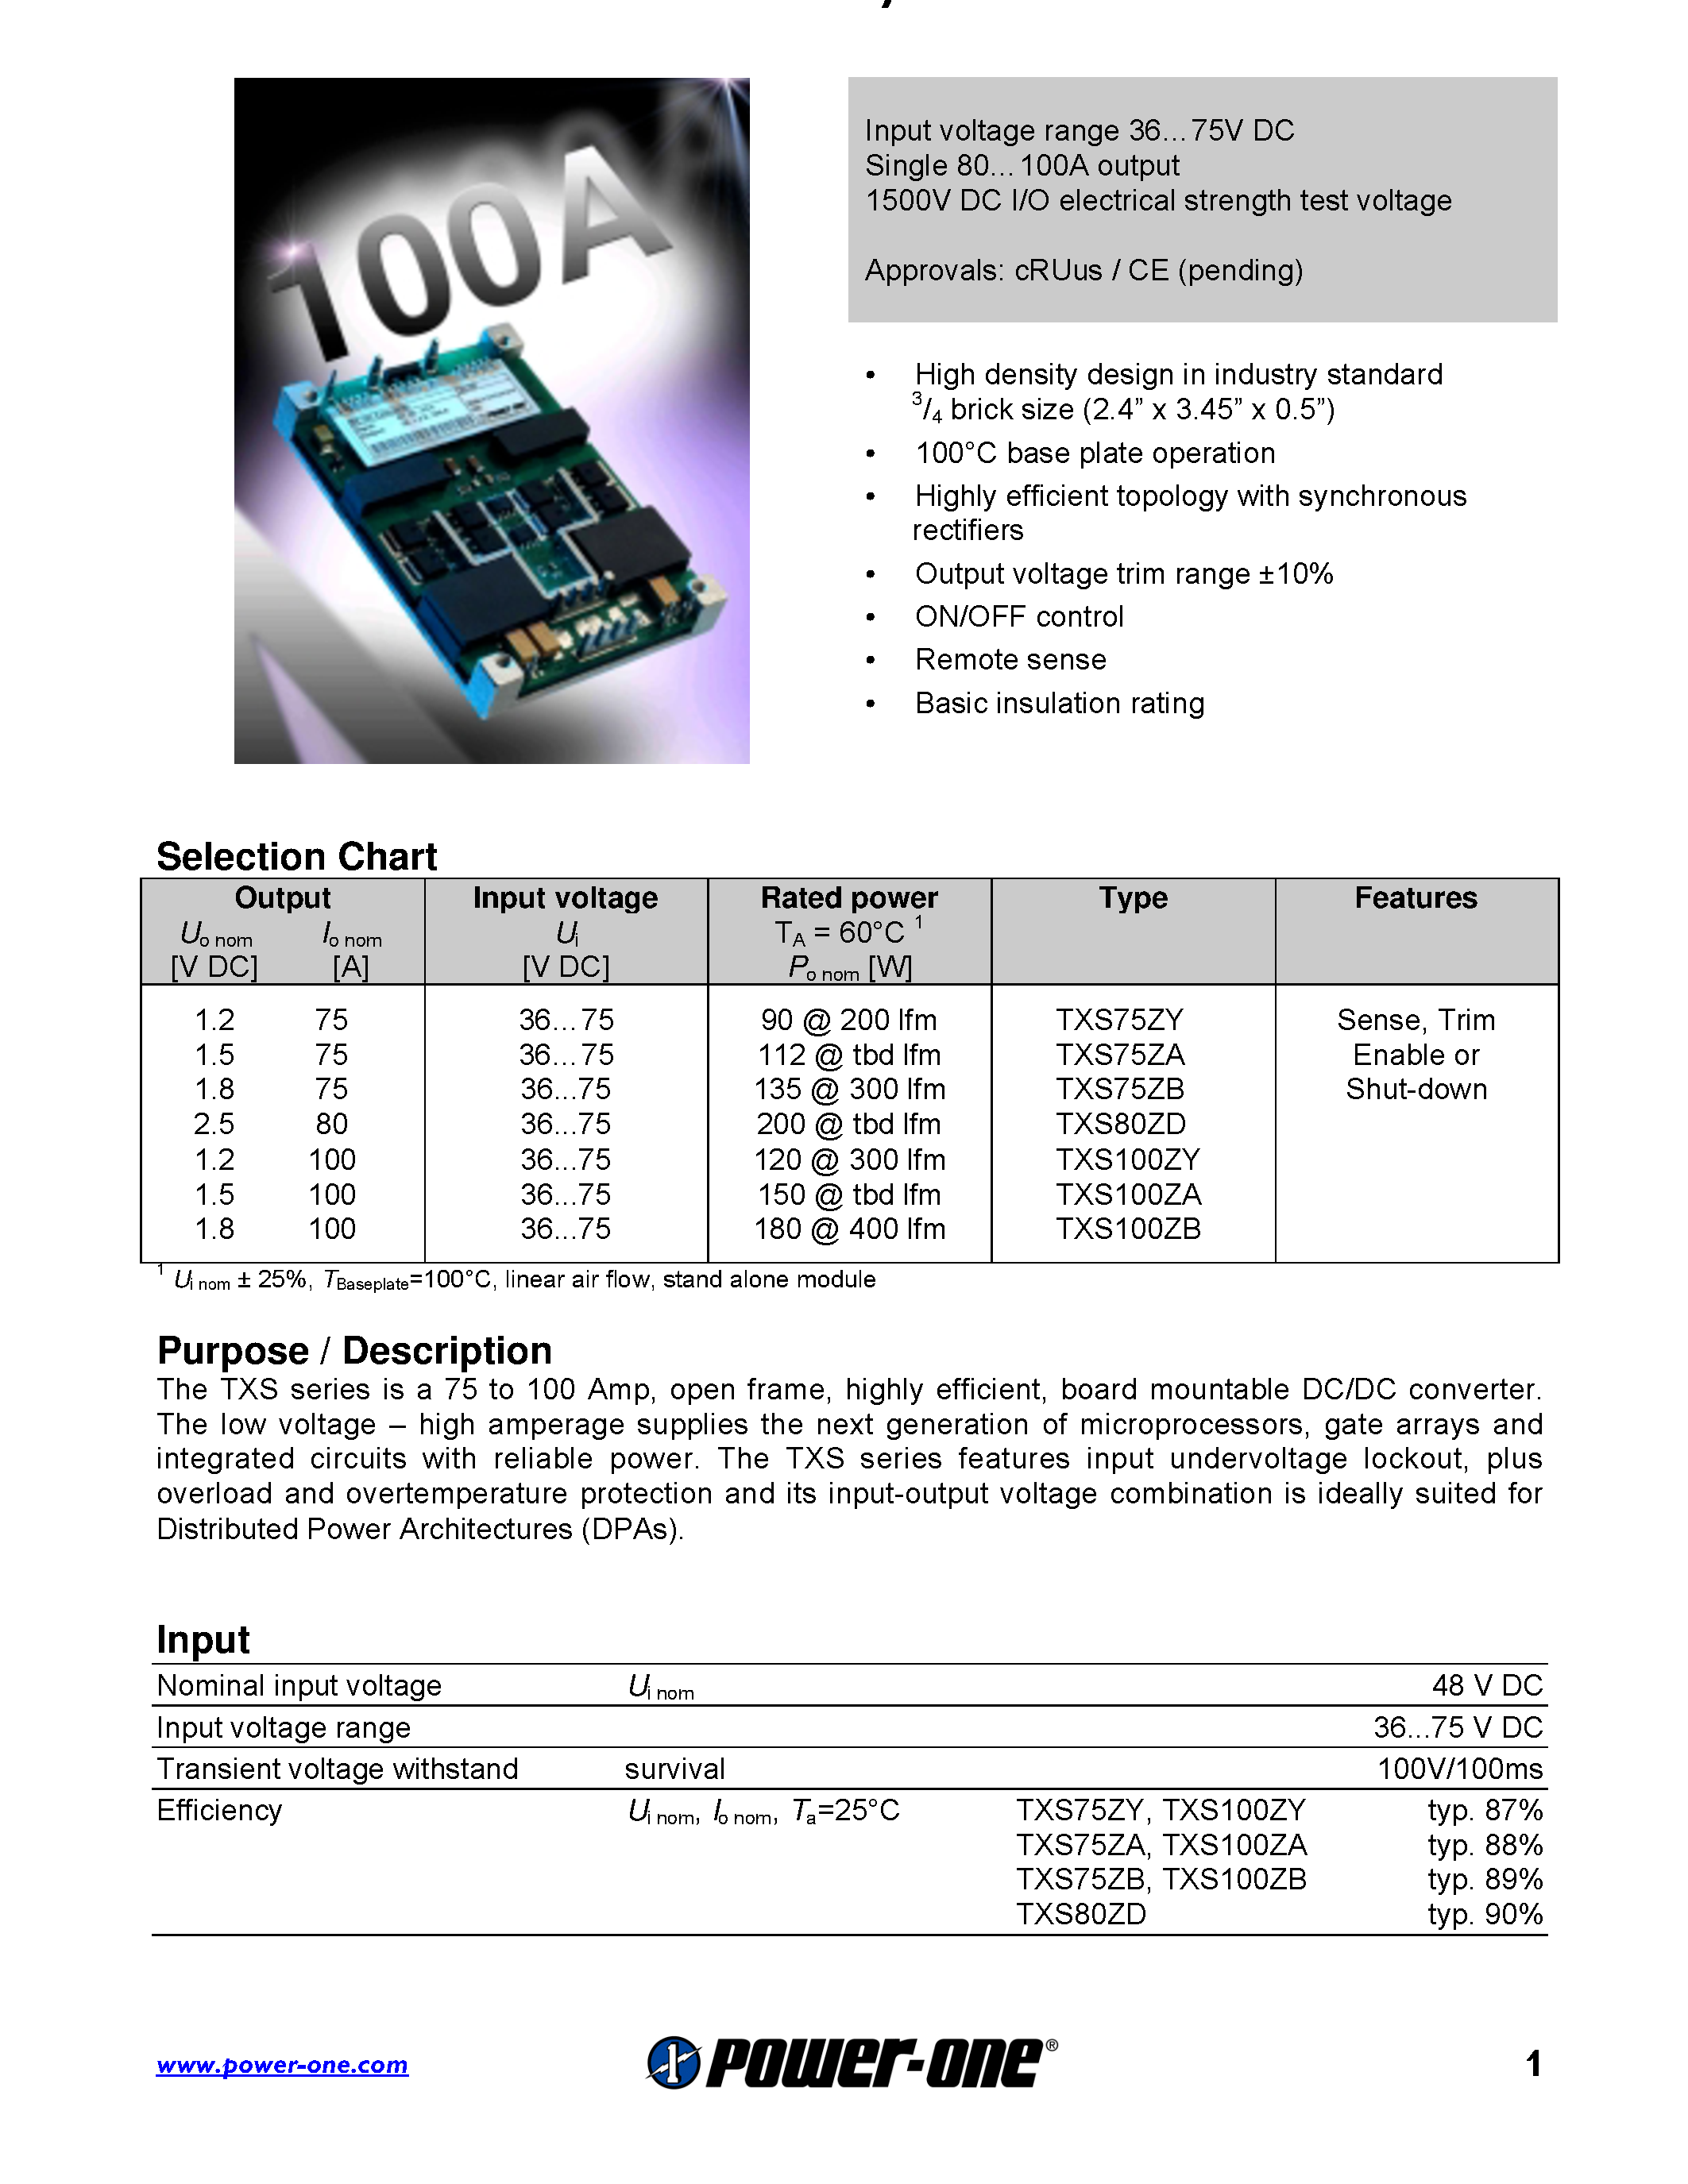 Datasheet TXS75ZY - Input voltage range 3675V DC Single 80100A output 1500V DC I/O electrical strength test voltage page 1